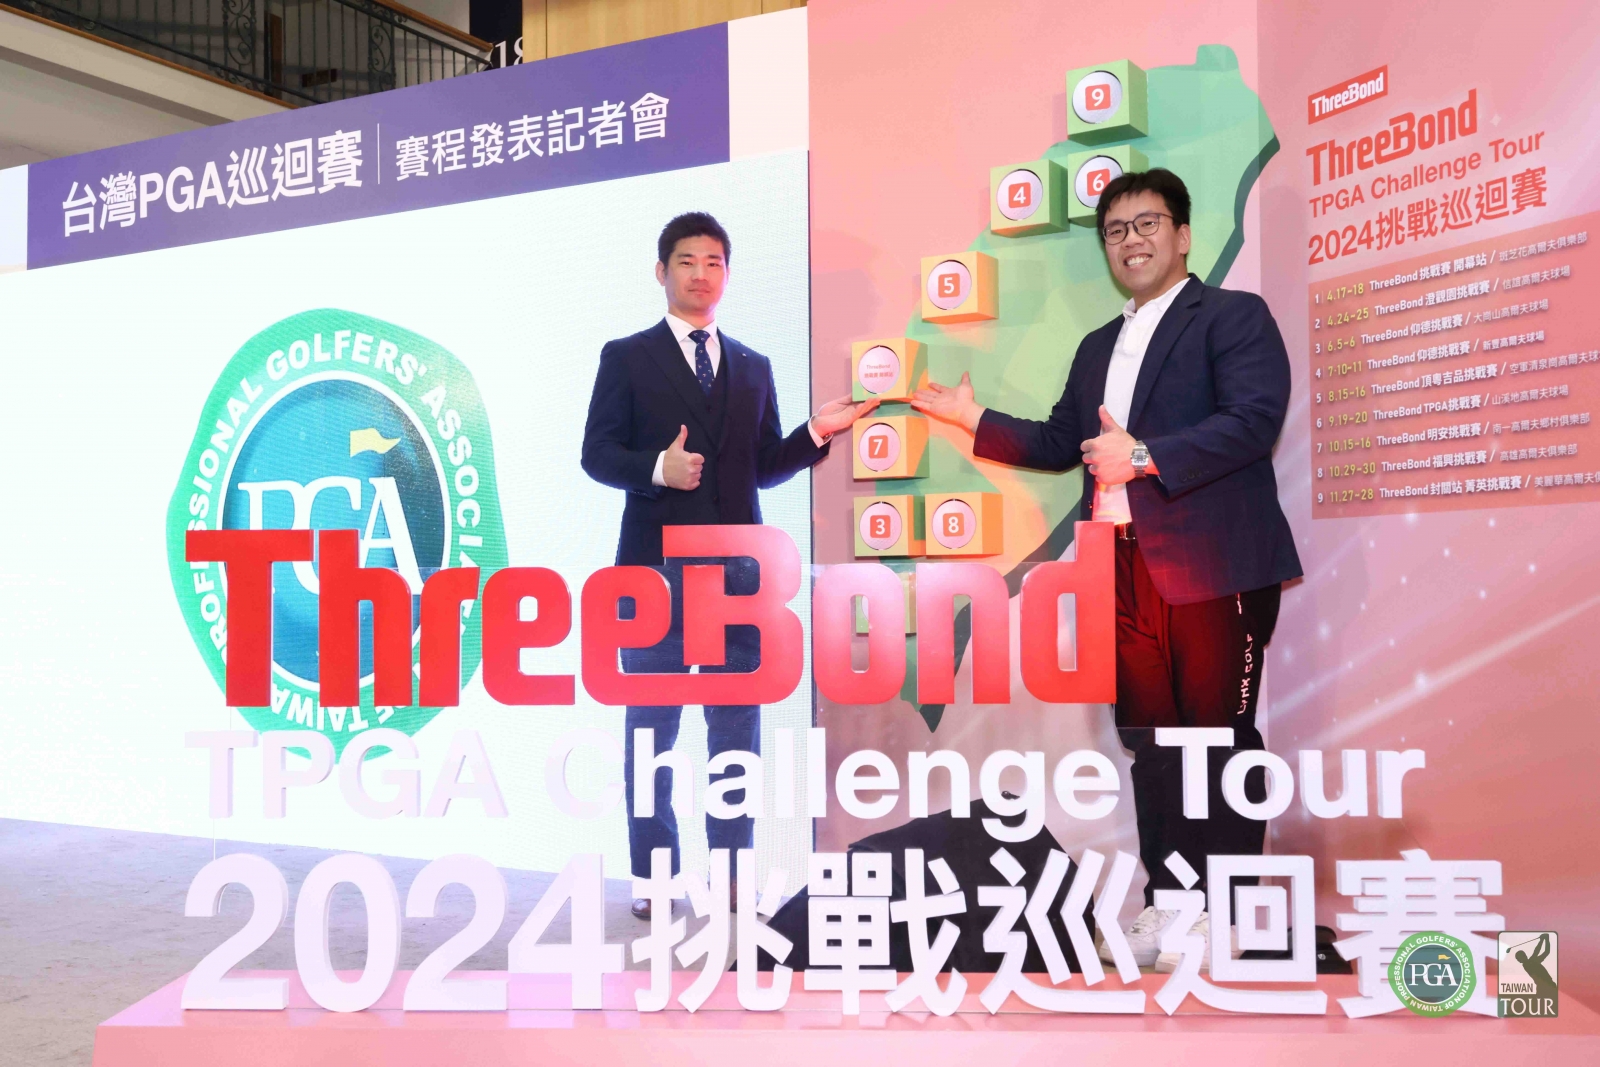 2024ThreeBond香港公司台灣分公司總經理泰地宏和與台南斑芝花球場總經理鄭博元(右)主辦今年首場挑戰賽。(林傑、鍾豐榮攝影)